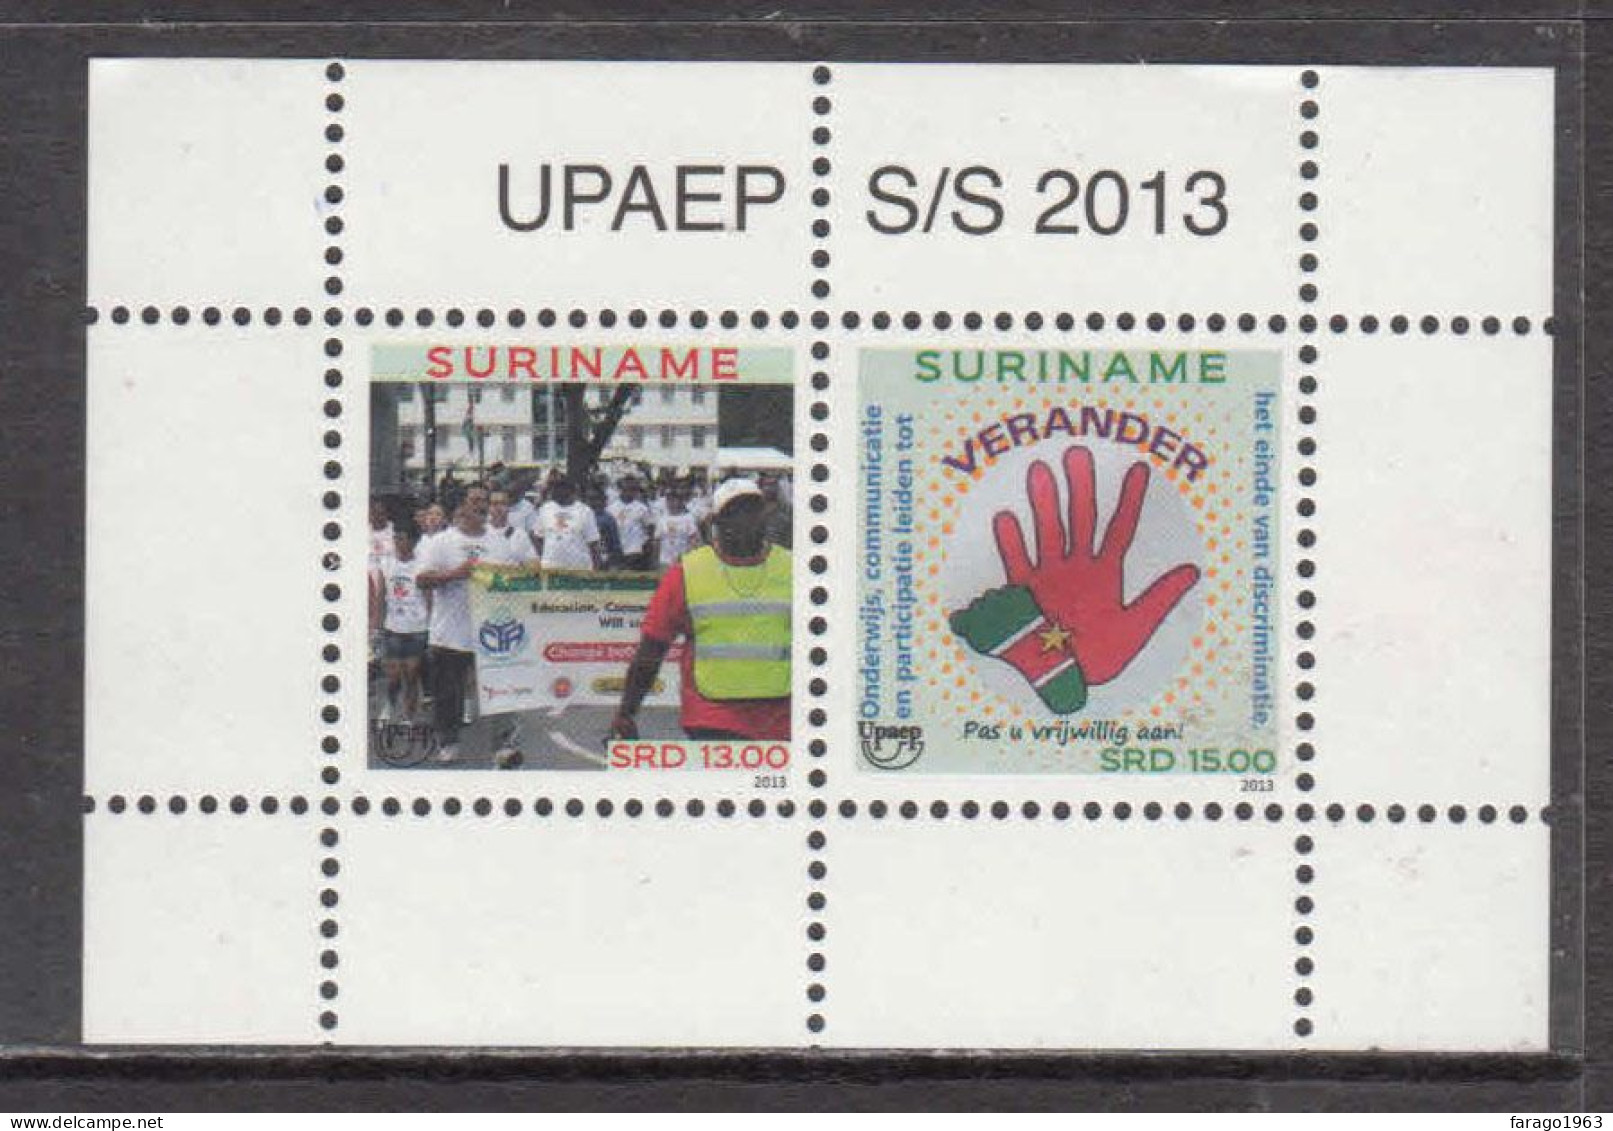 2013 Surinam Suriname Upaep Stop Discrimination Souvenir Sheet MNH - Surinam